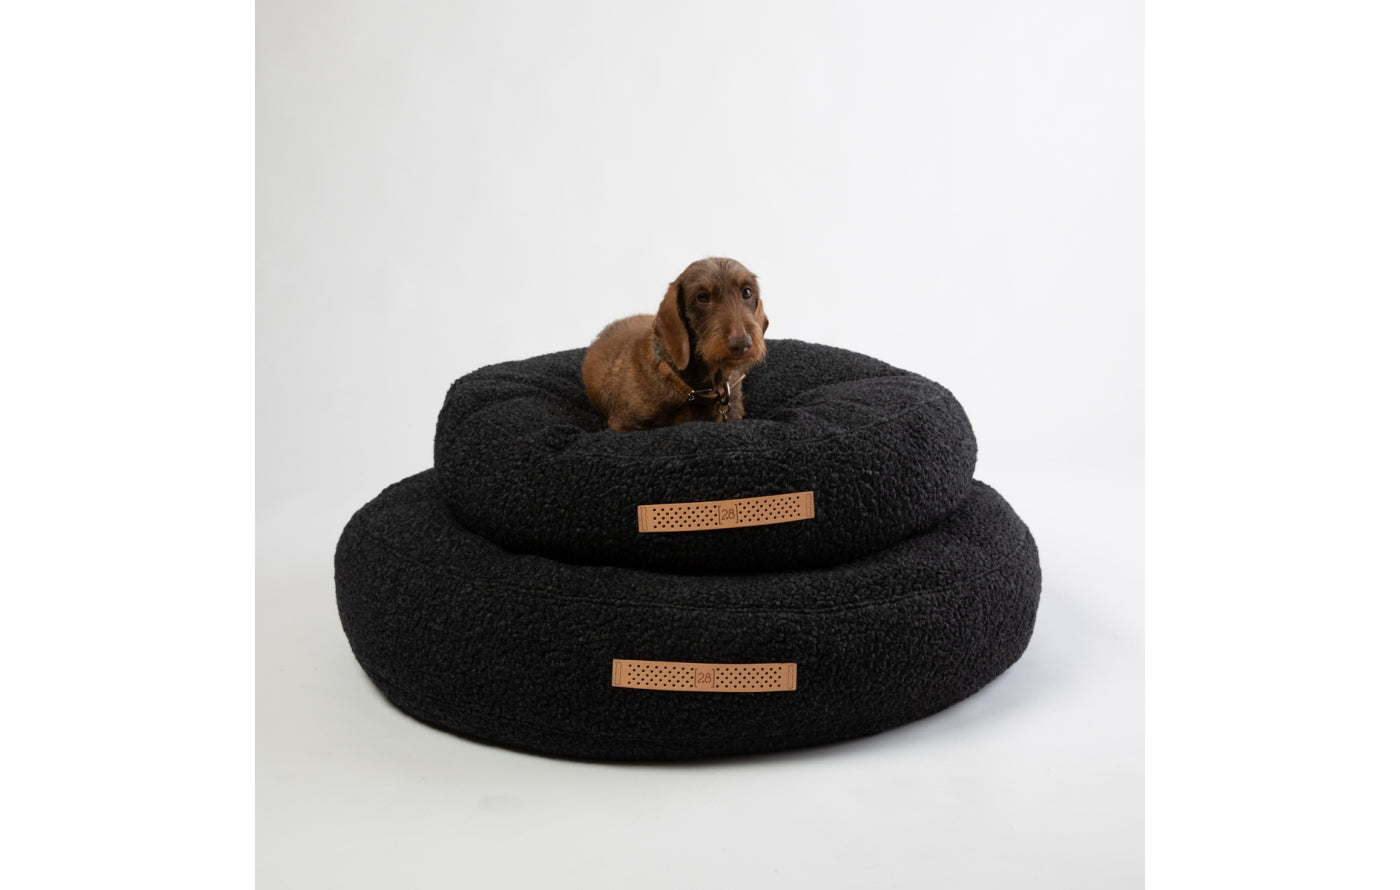 2.8 duepuntootto Fulvio Boucle Wool Dog Cushion Charcoal flauschiges Hundebett